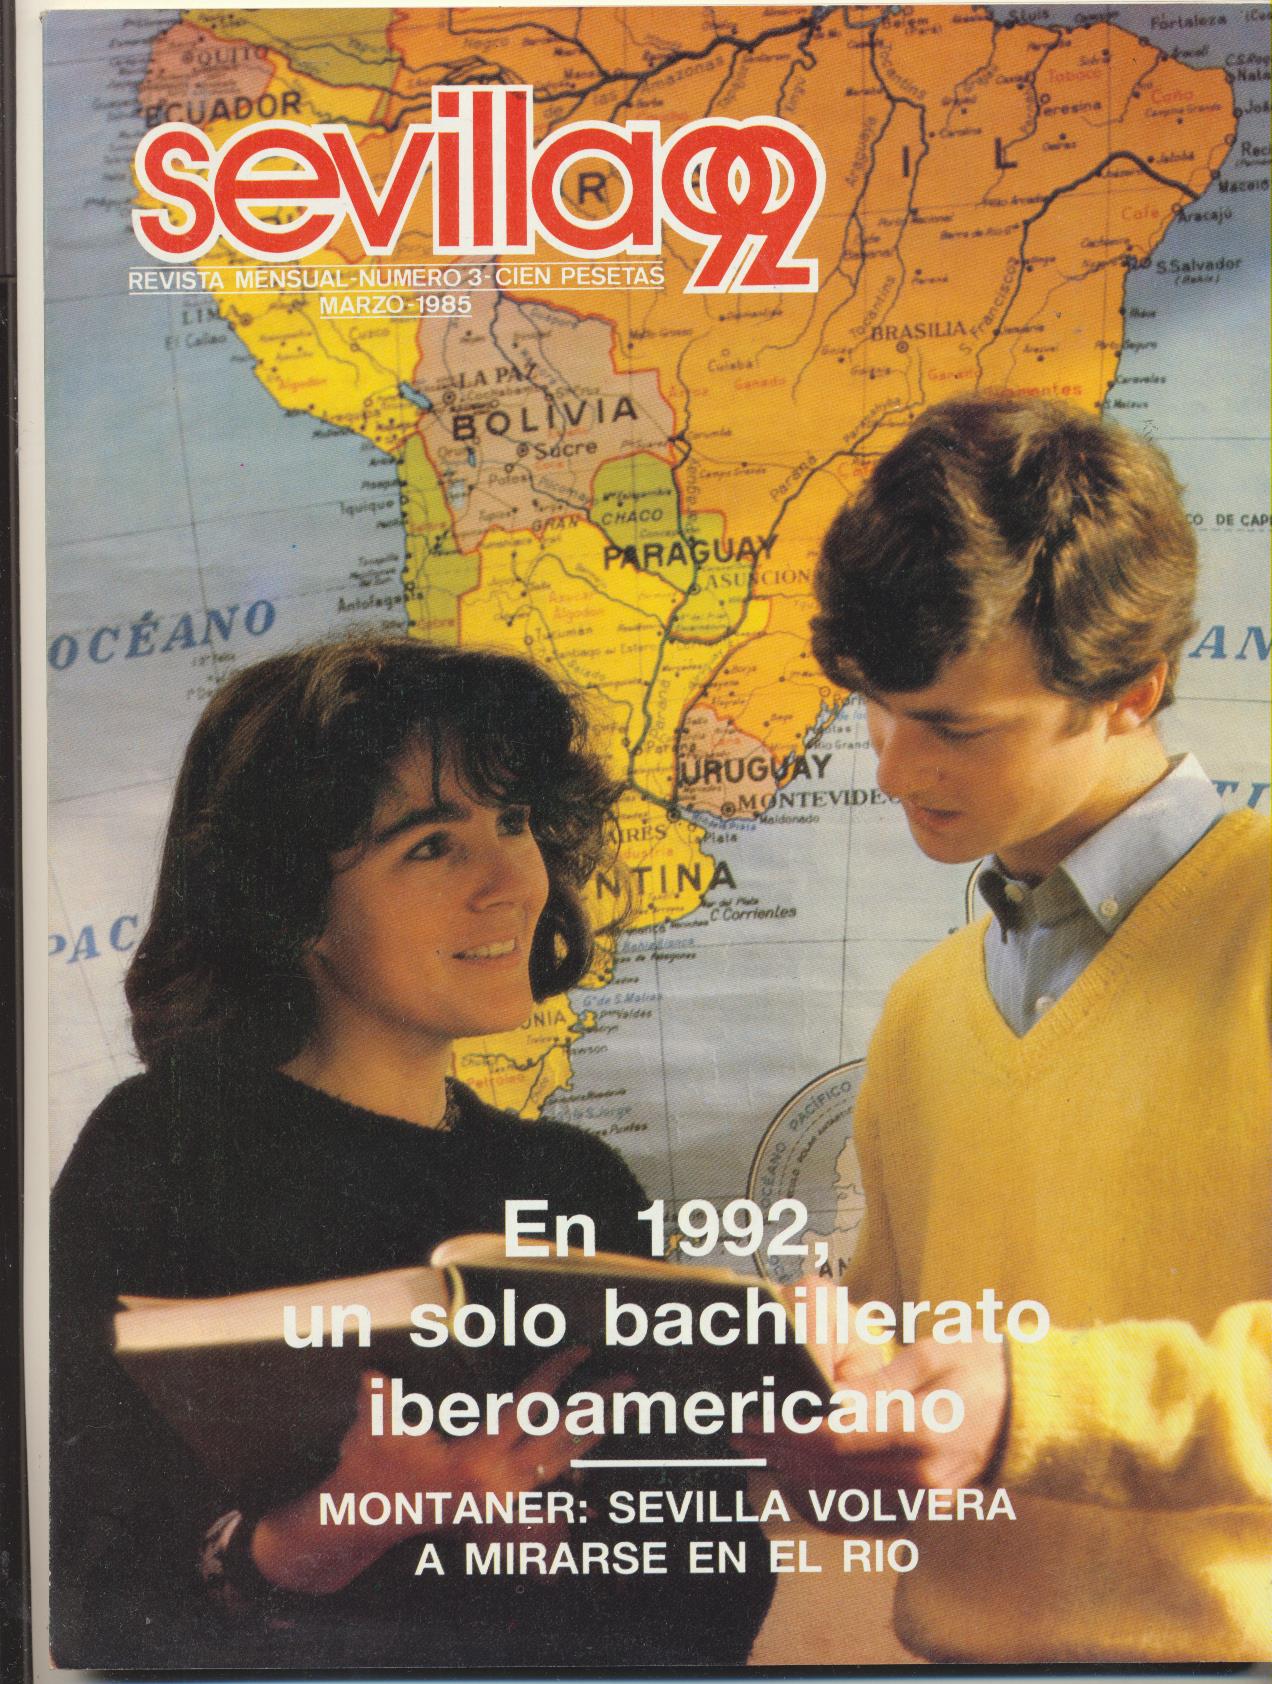 Sevilla 92. nº 3. Marzo 1985